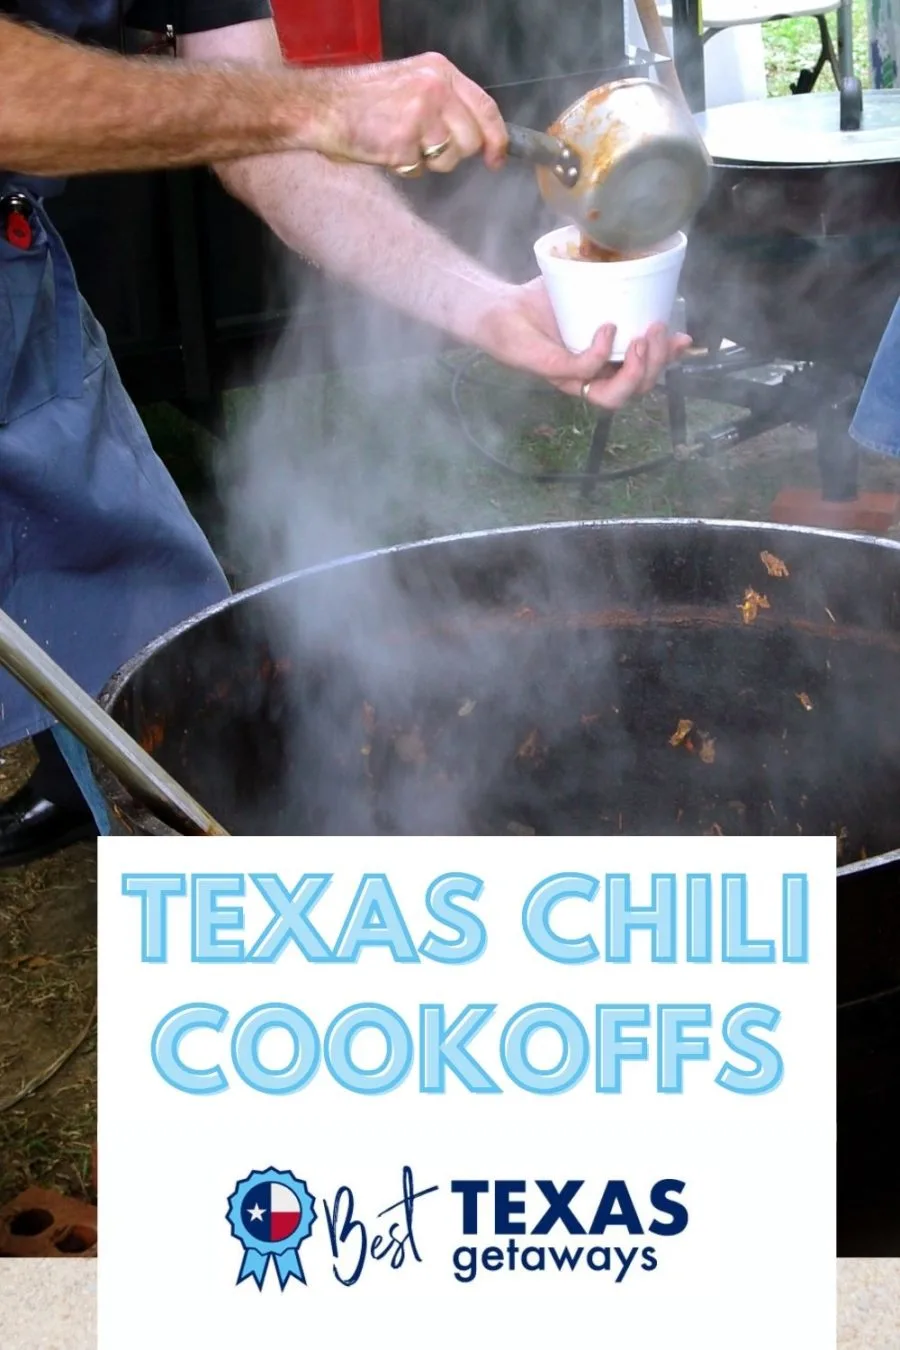 Calendar of major Texas chili cookoffs